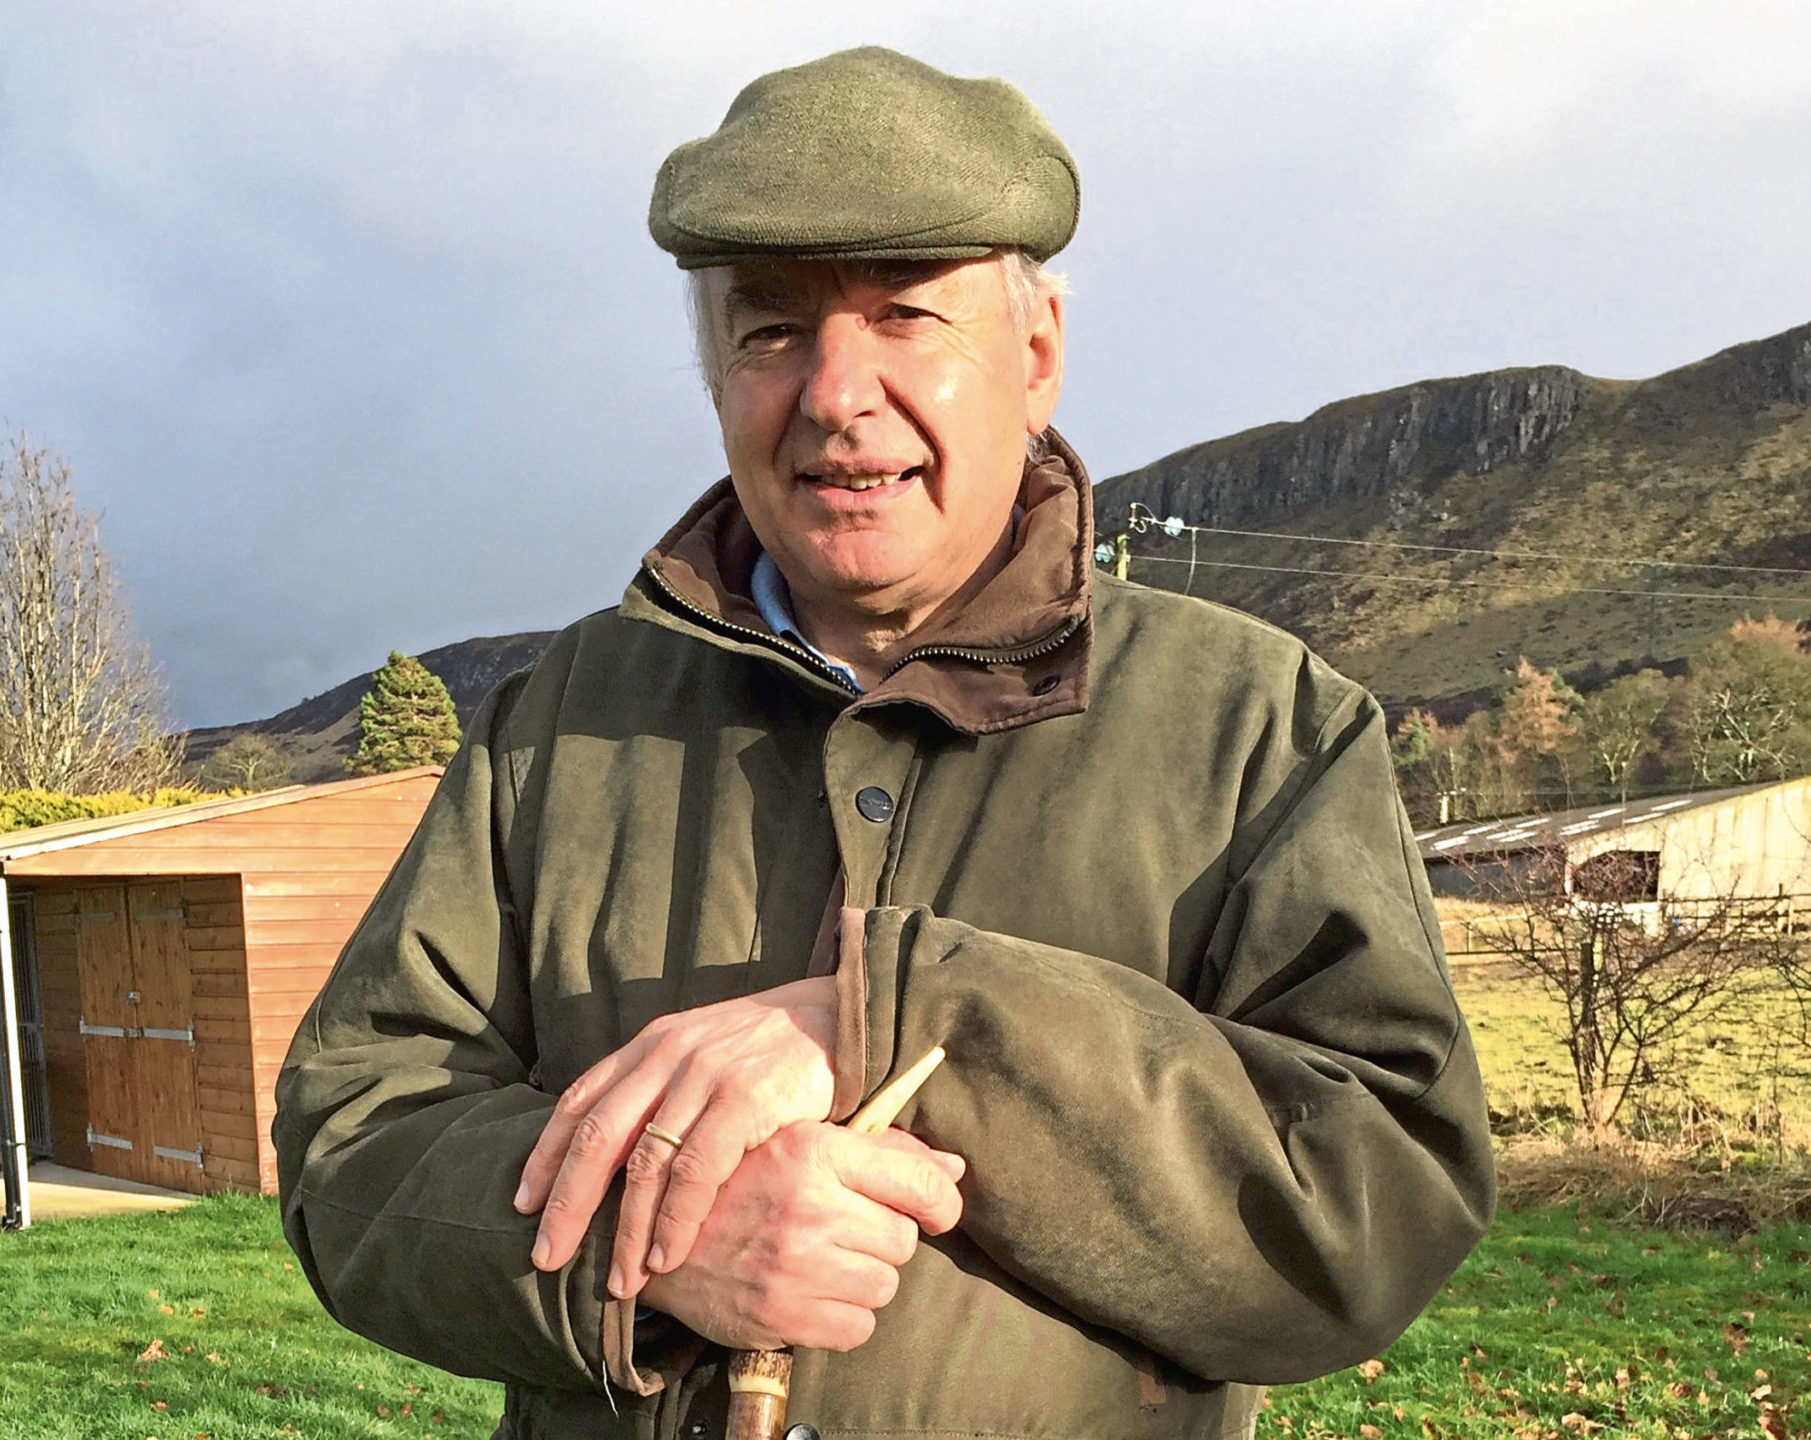 Bob McIntosh calls on farmers and landowners to be reasonable.